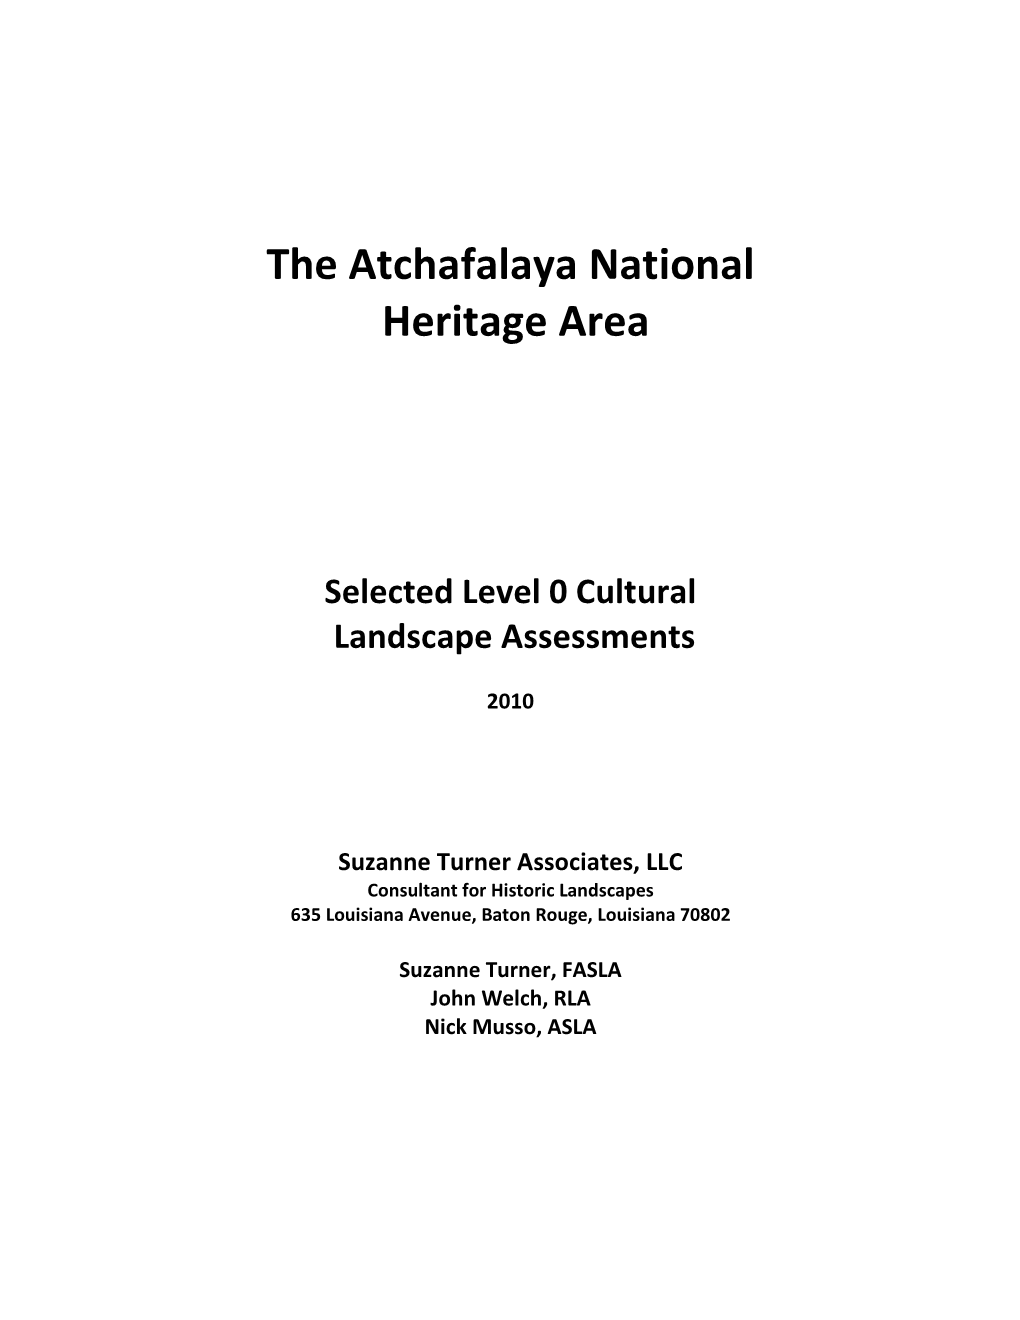 The Atchafalaya National Heritage Area